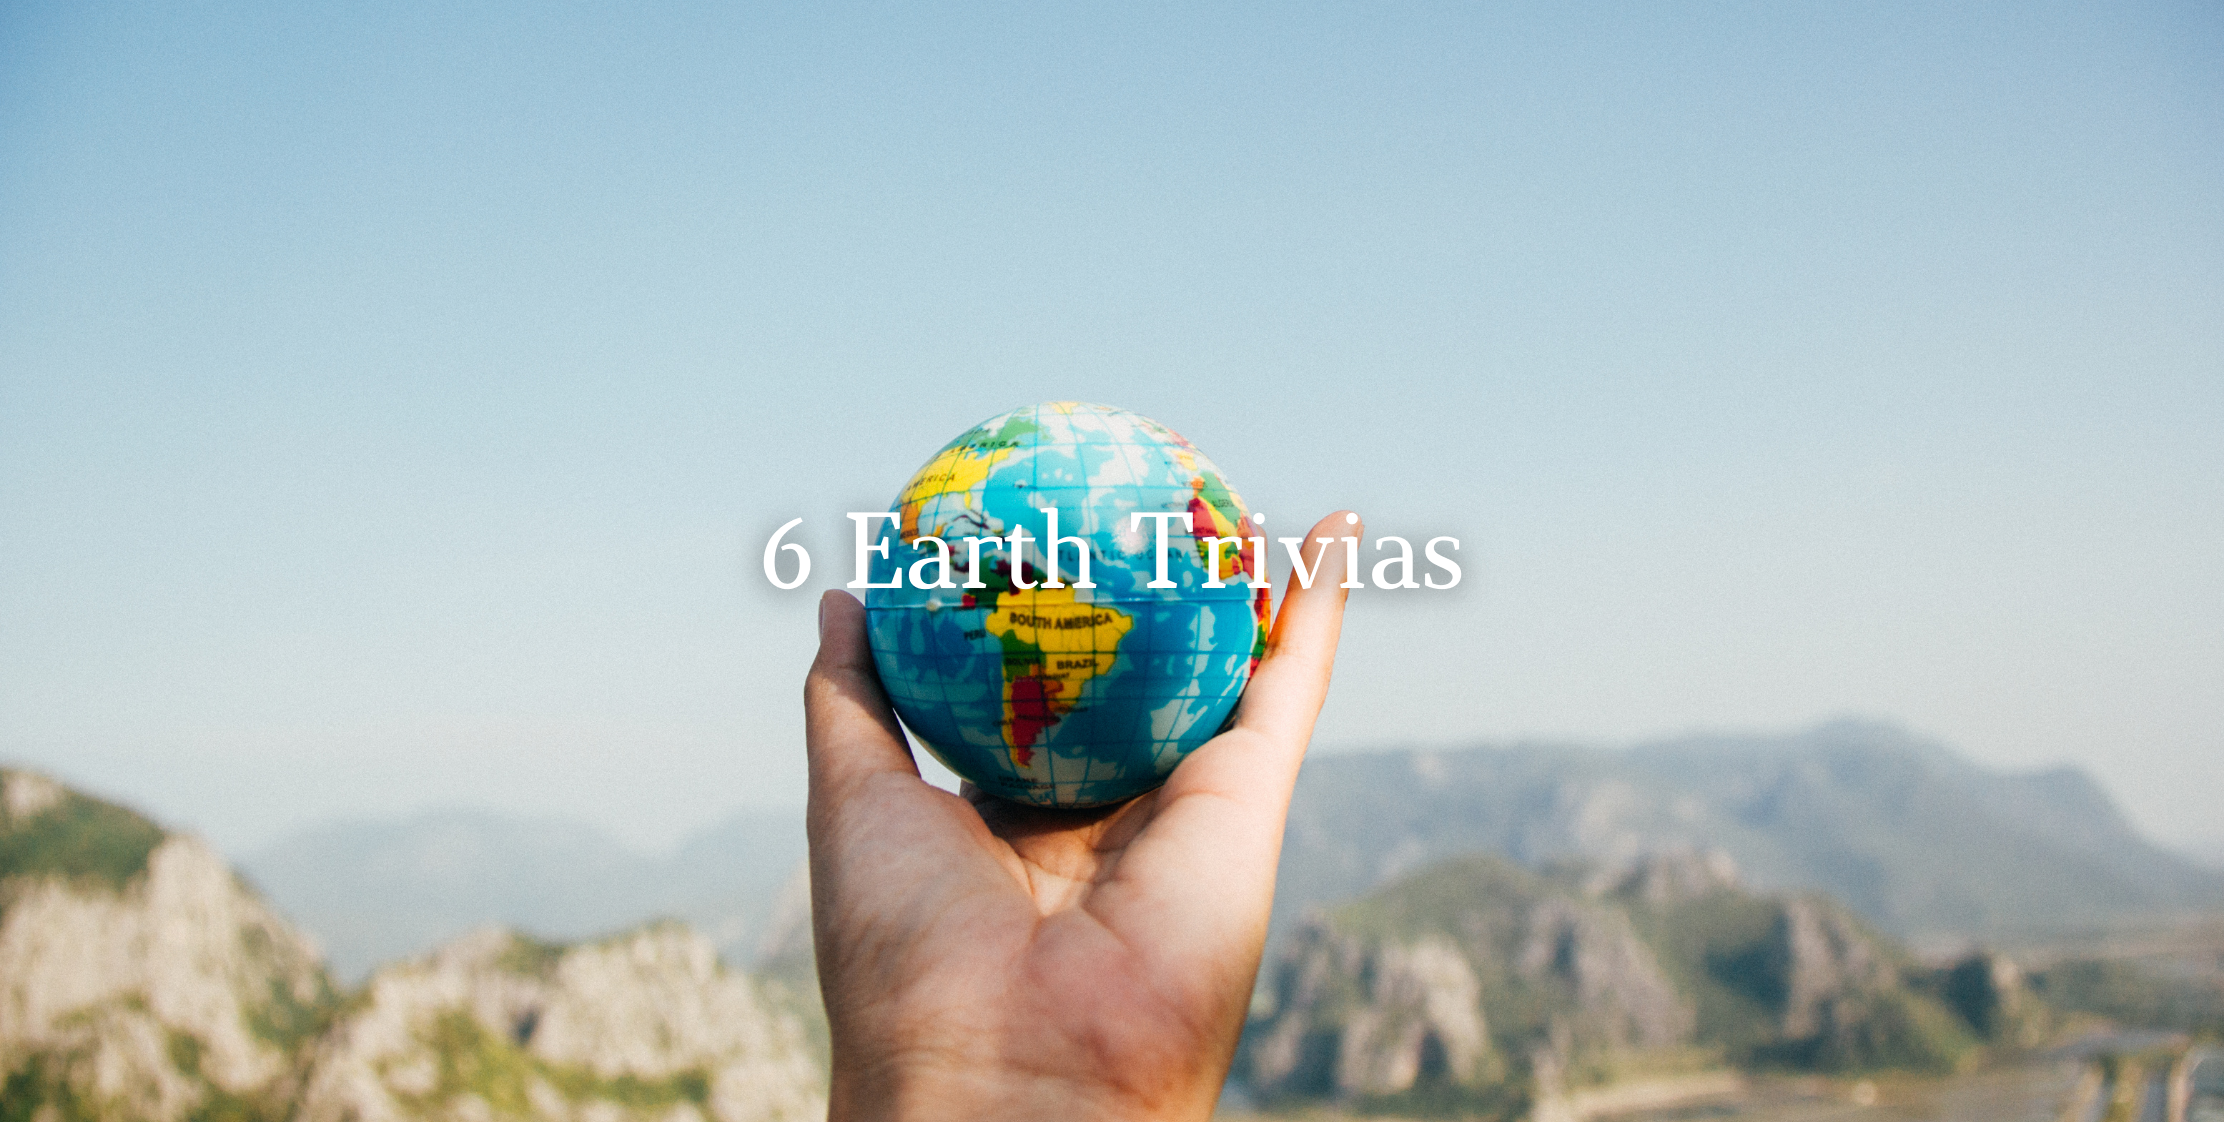 6 Earth Trivias image